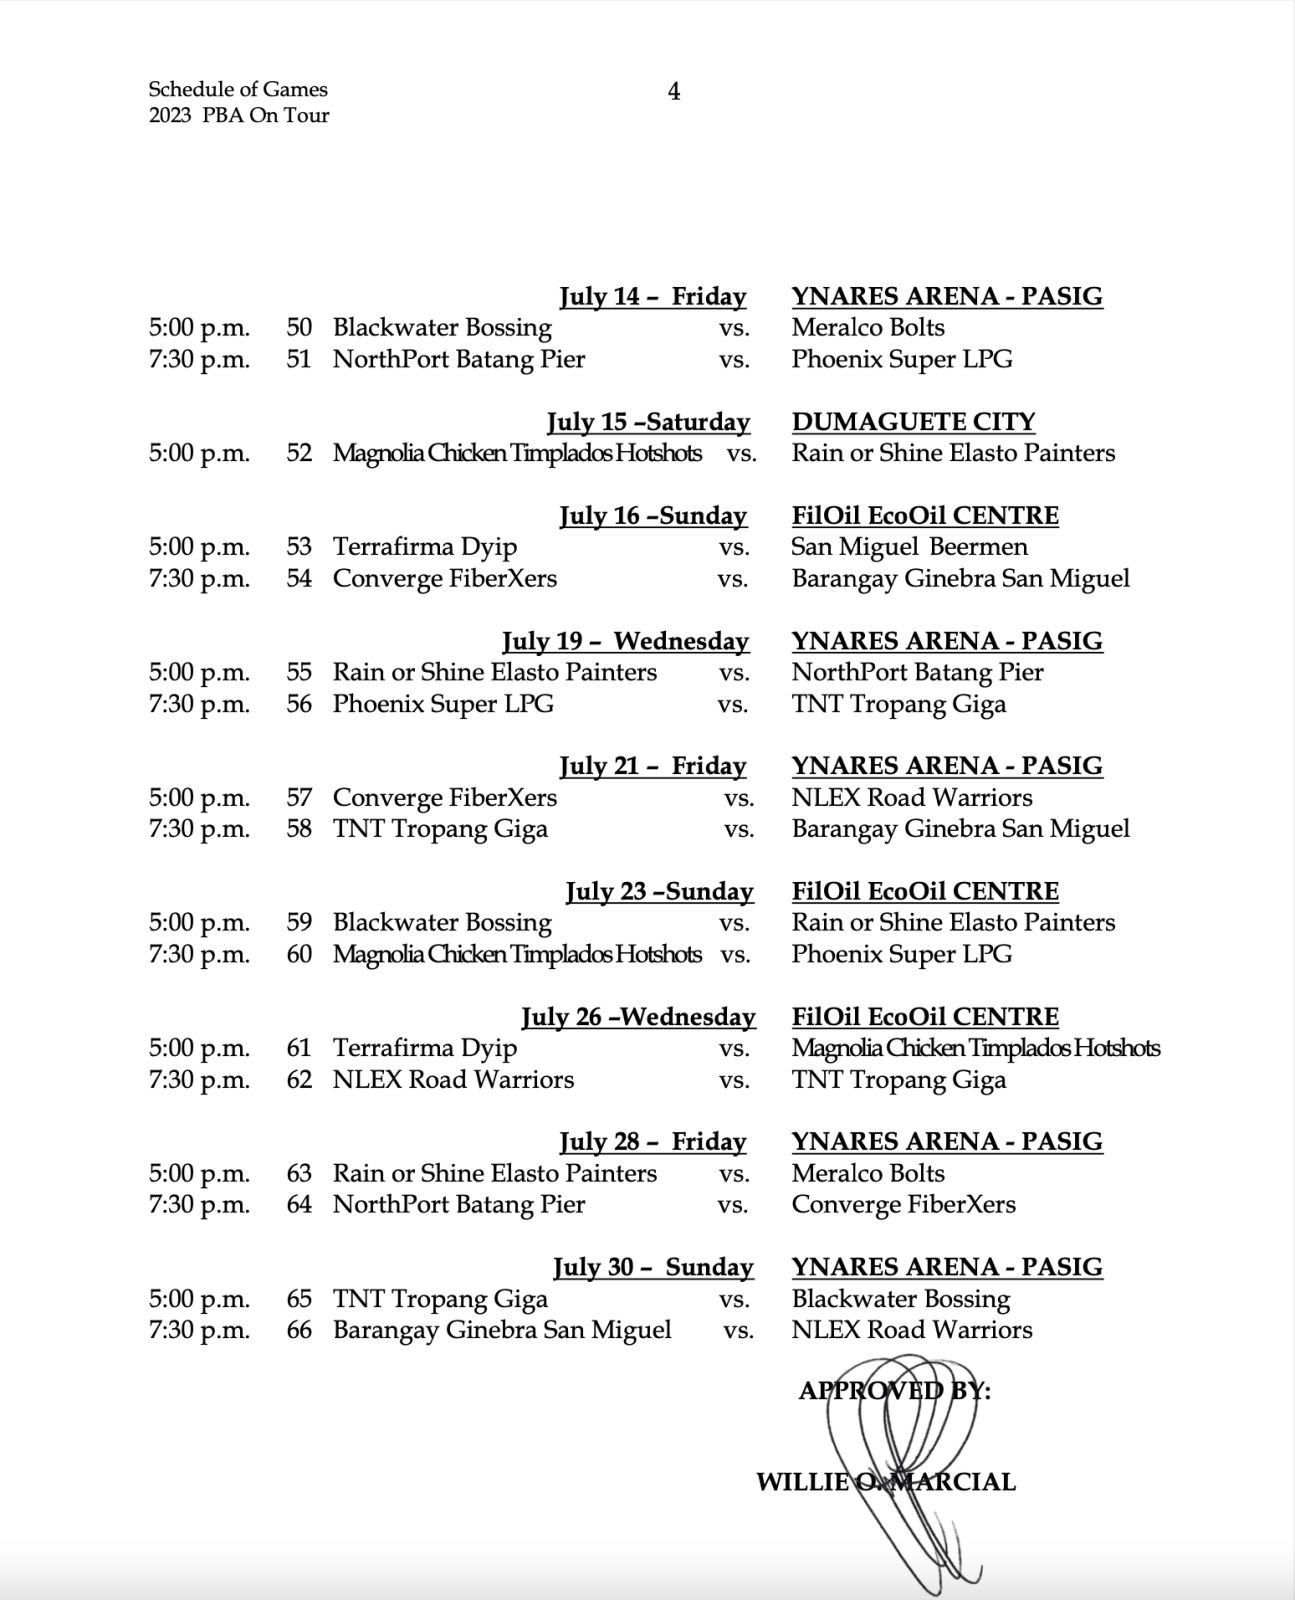 1994 pba tour schedule